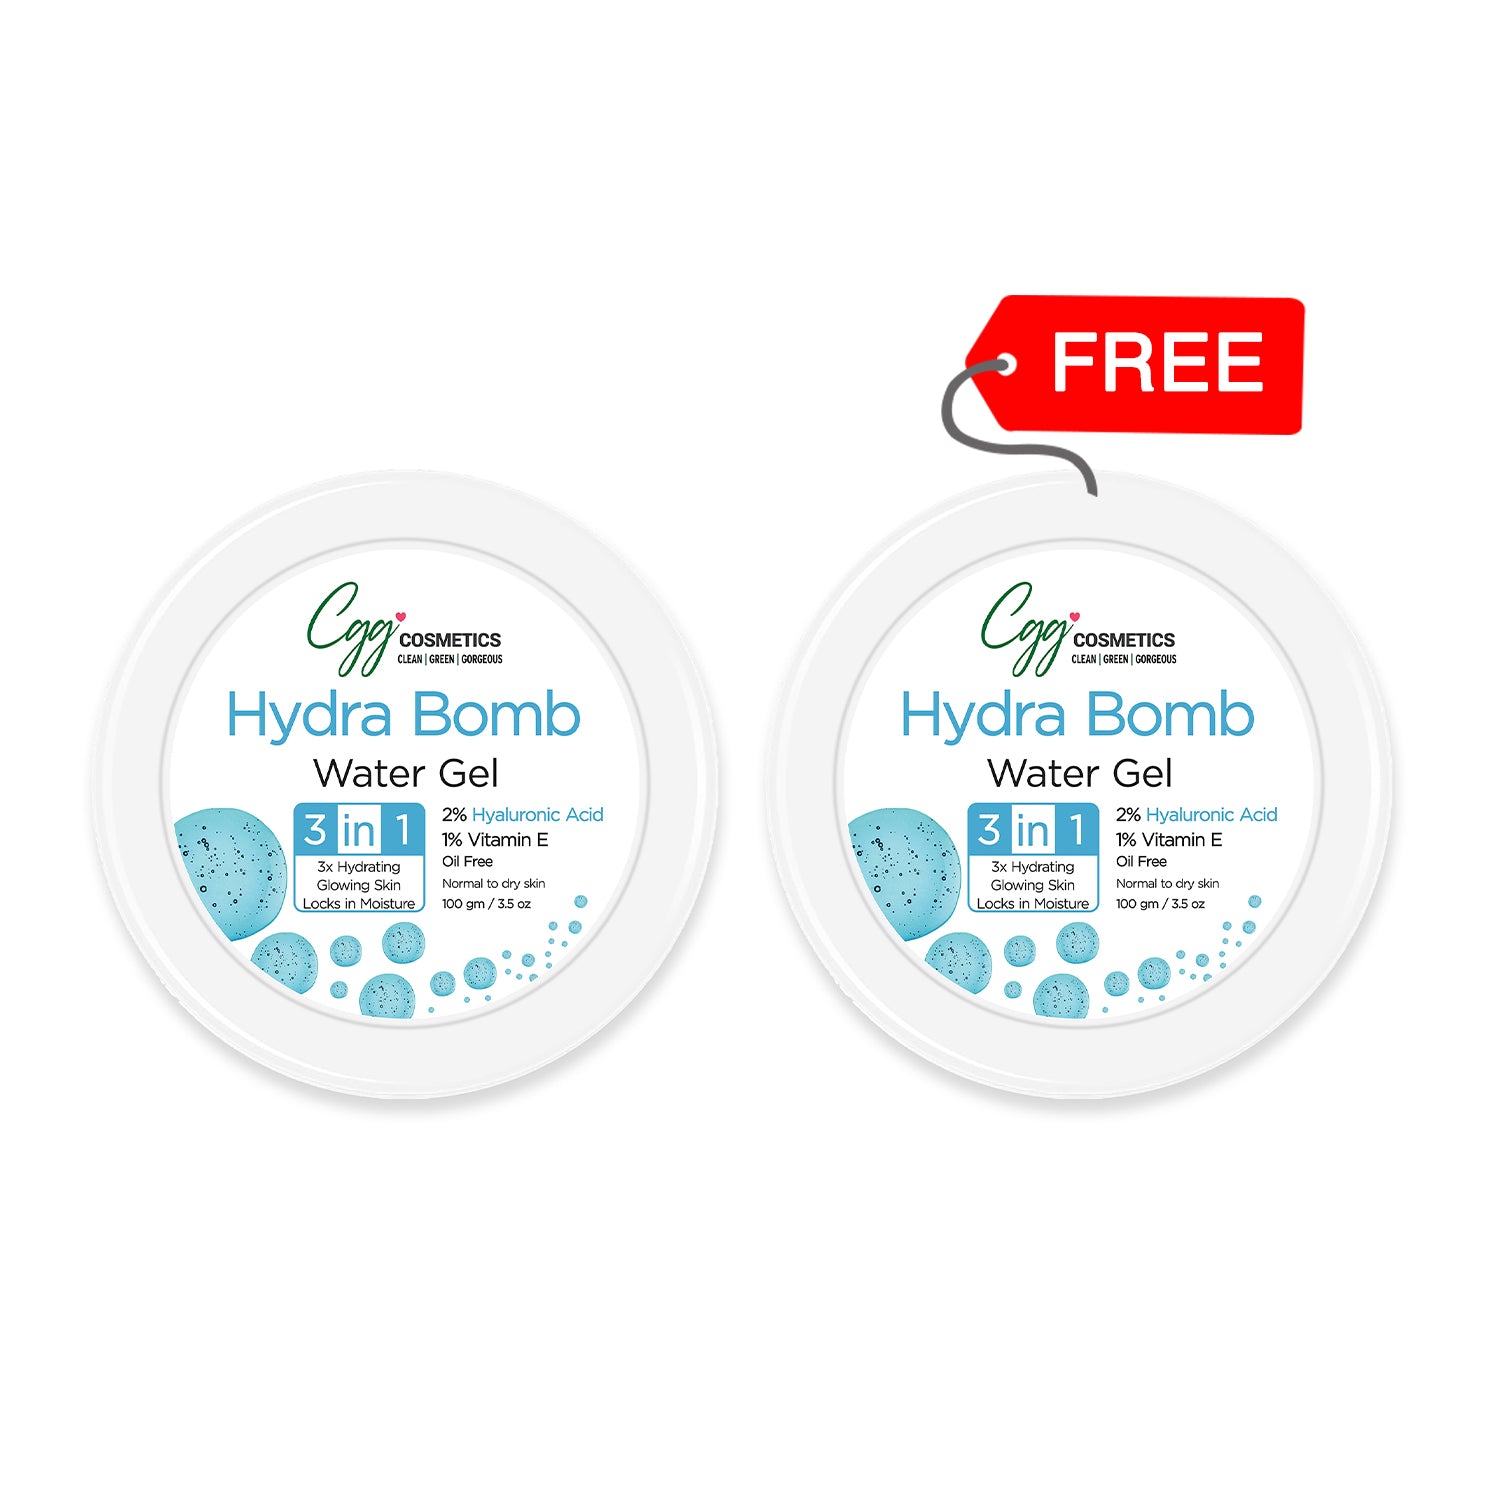 CGG Cosmetics Hydra Bomb Water Gel 100gm & GET FREE 100gm Hydra Bomb Water Gel - 3X Hydration